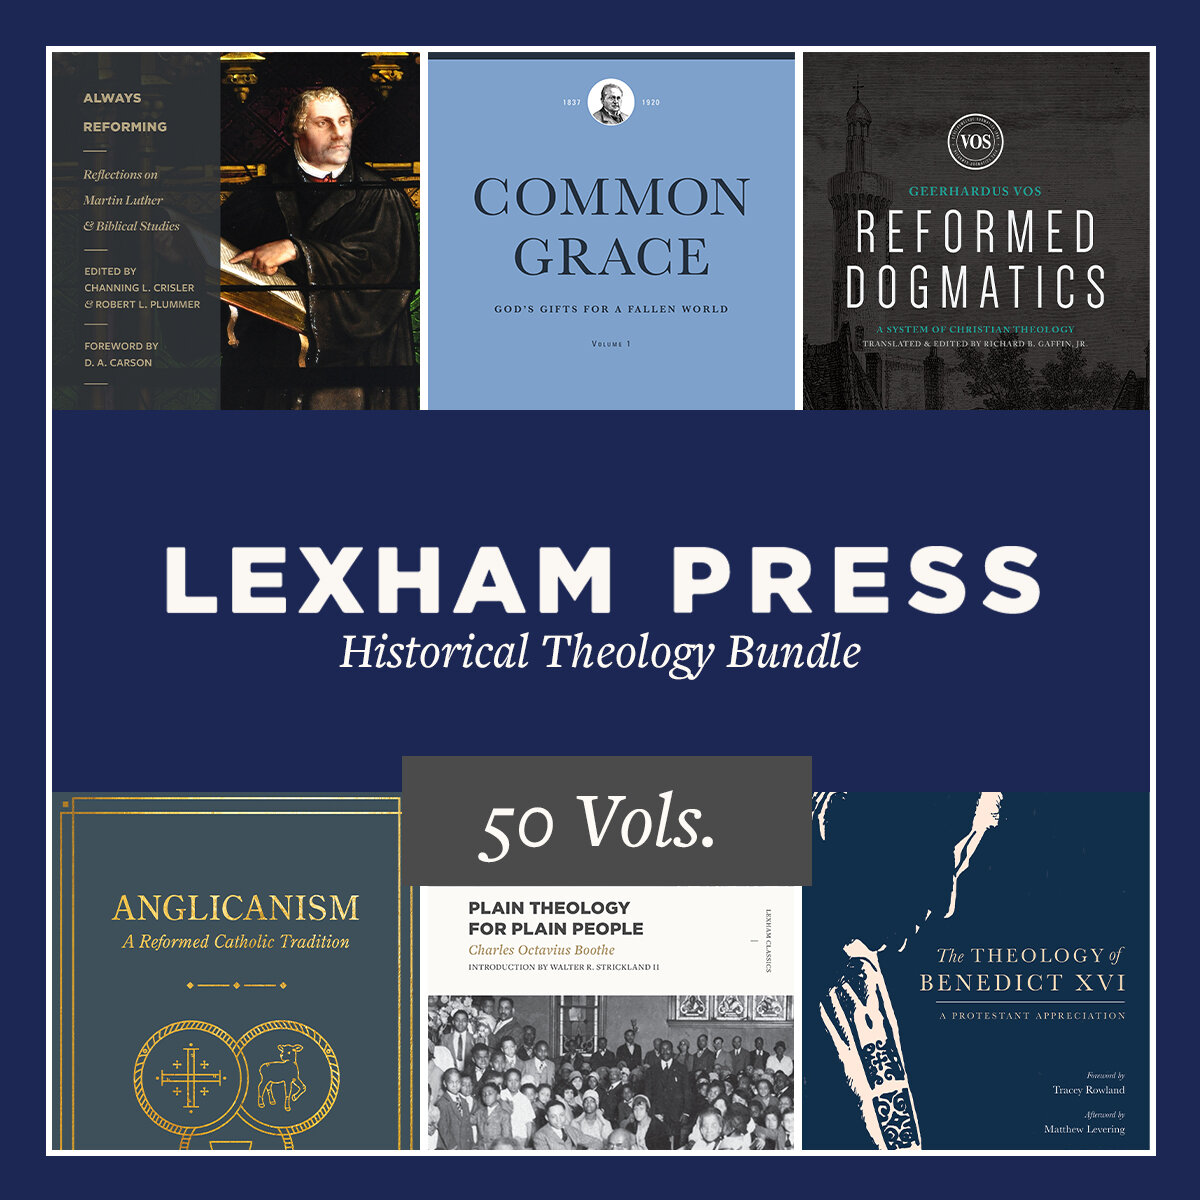 Lexham Press Historical Theology Bundle (50 vols.)